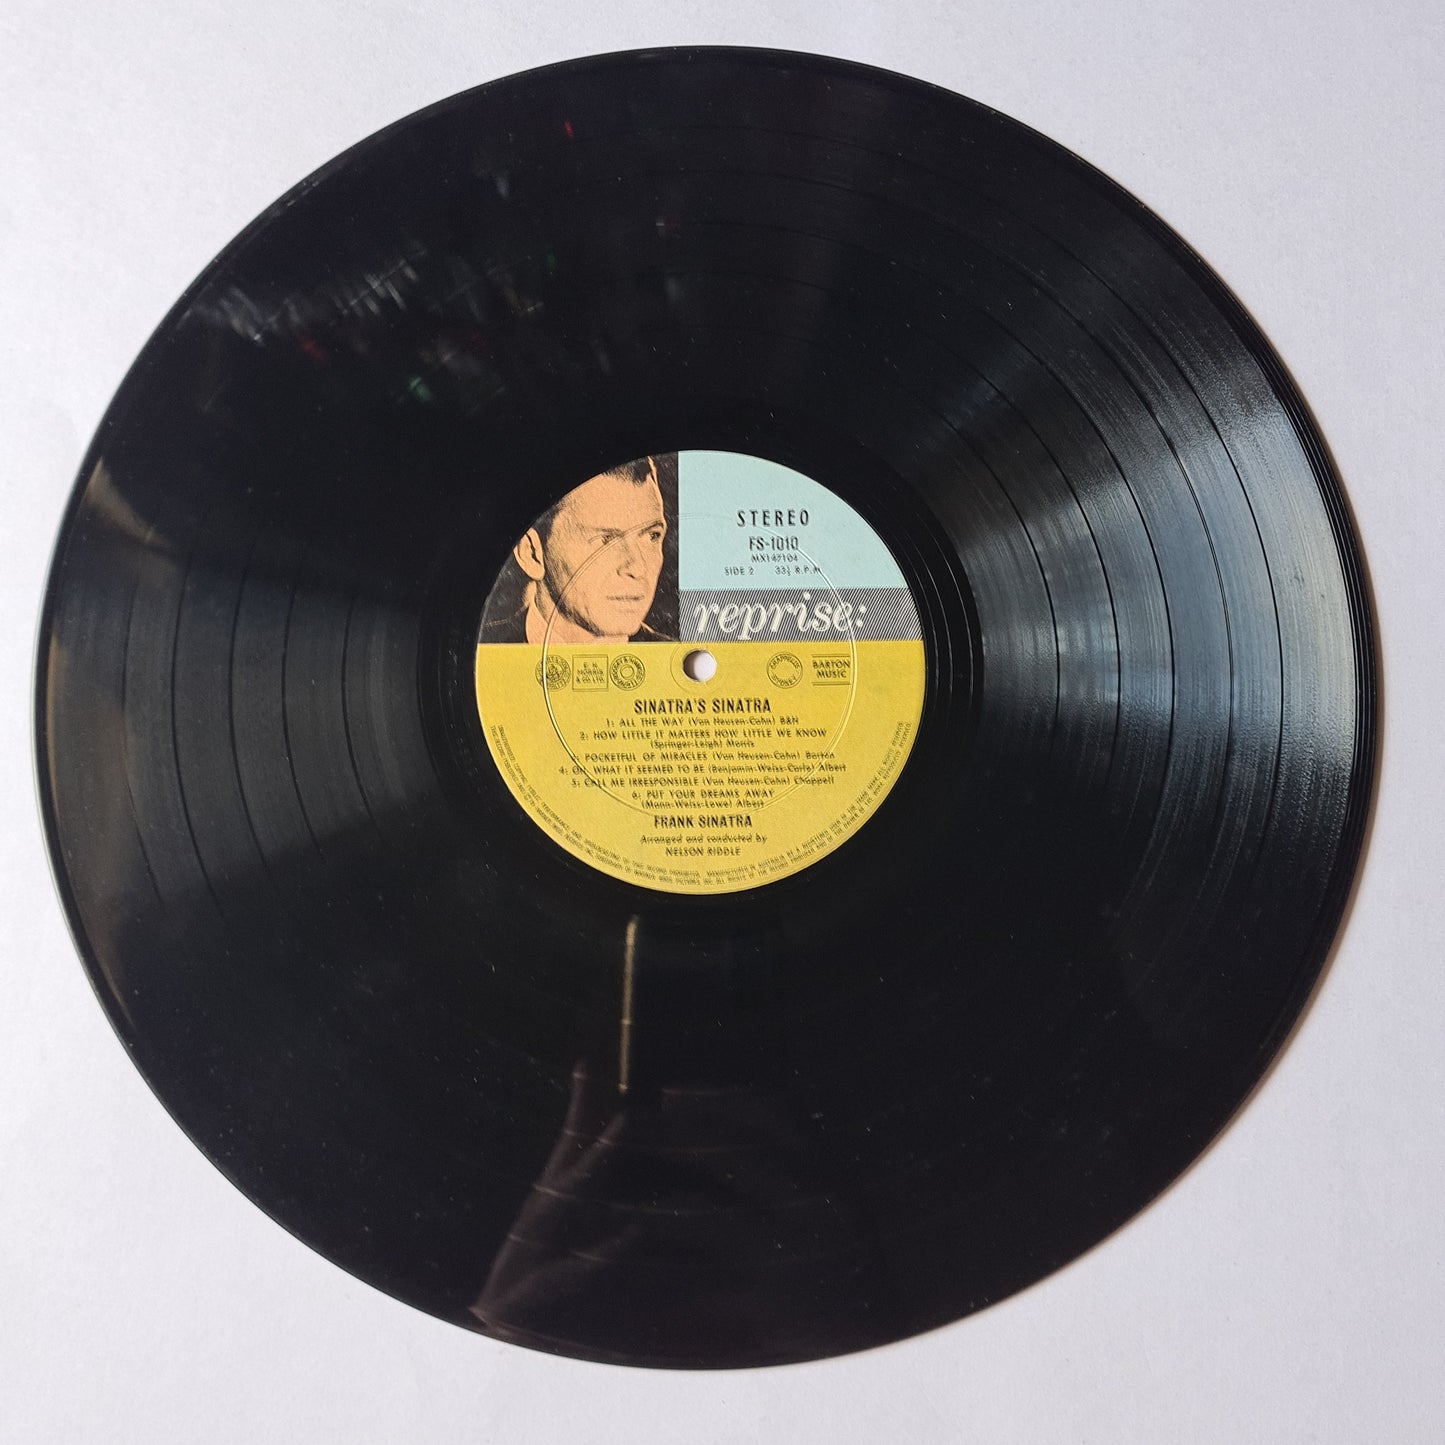 Frank Sinatra – Sinatra's Sinatra - 1963 - Vinyl Record